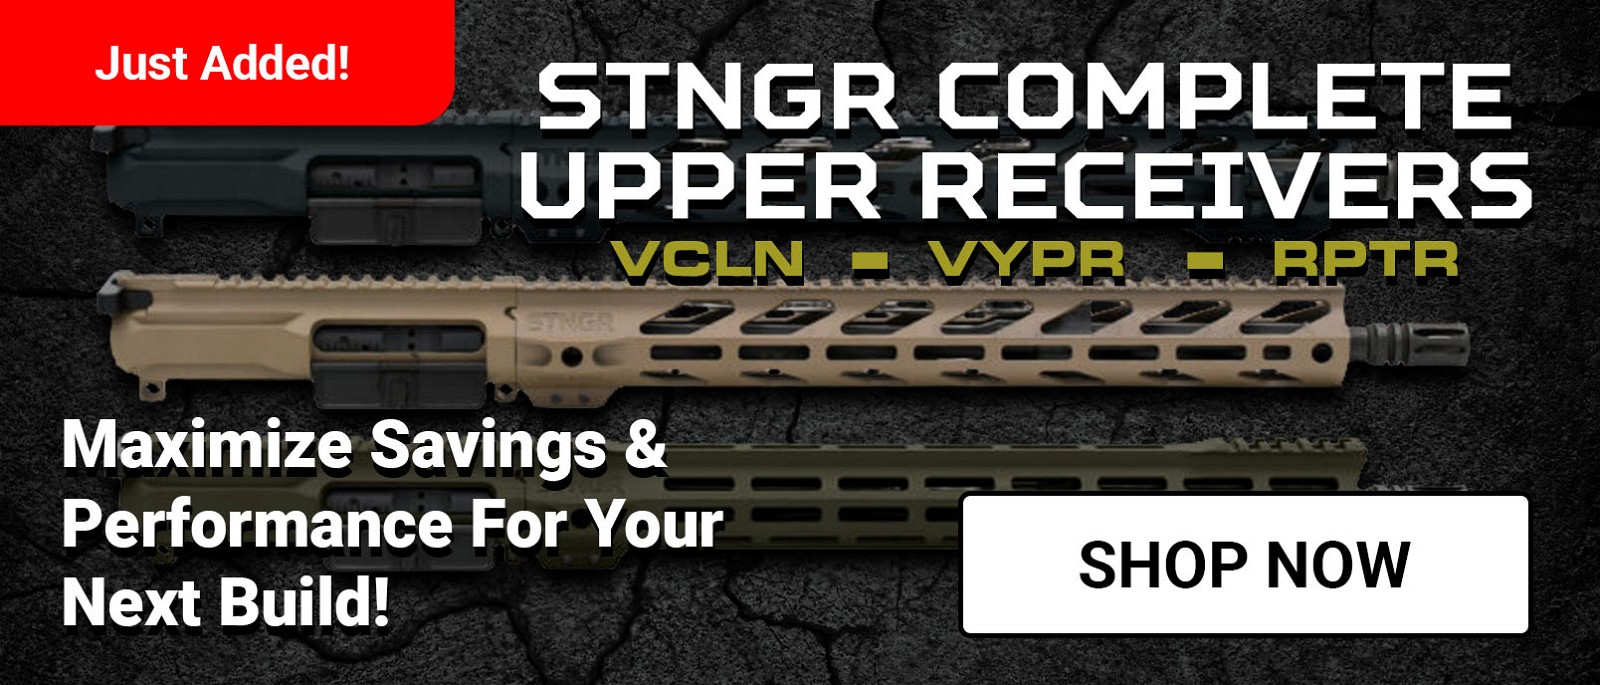 STNGR Complete Upper Receivers